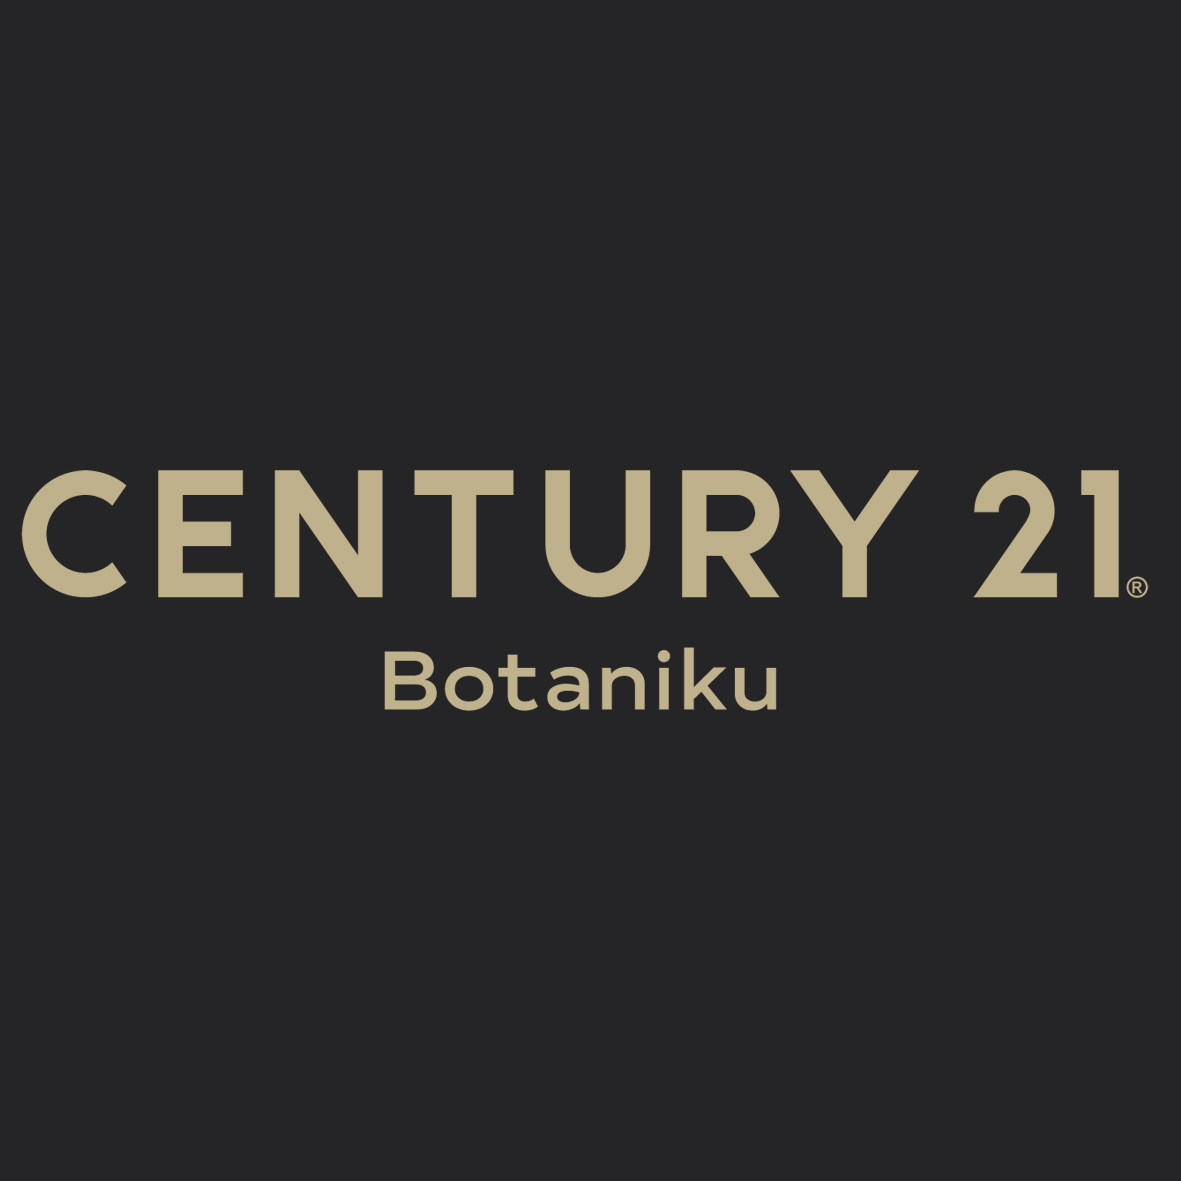 CENTURY 21 Botaniku